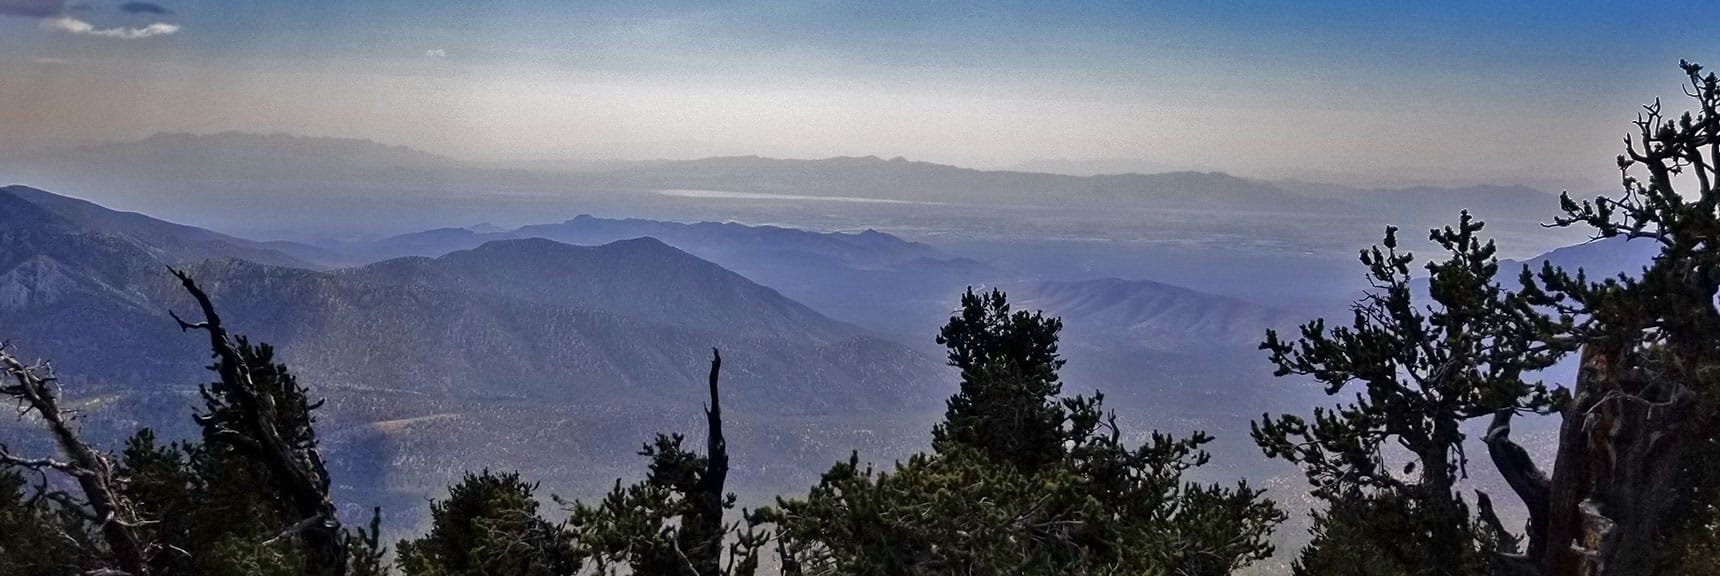 View Toward Pahrump and Telescope Peak from Bonanza Peak Summit | Bonanza Peak from Lee Canyon via the Lower Bristlecone Pine Trail and Bonanza Trail | Spring Mountains, Nevada